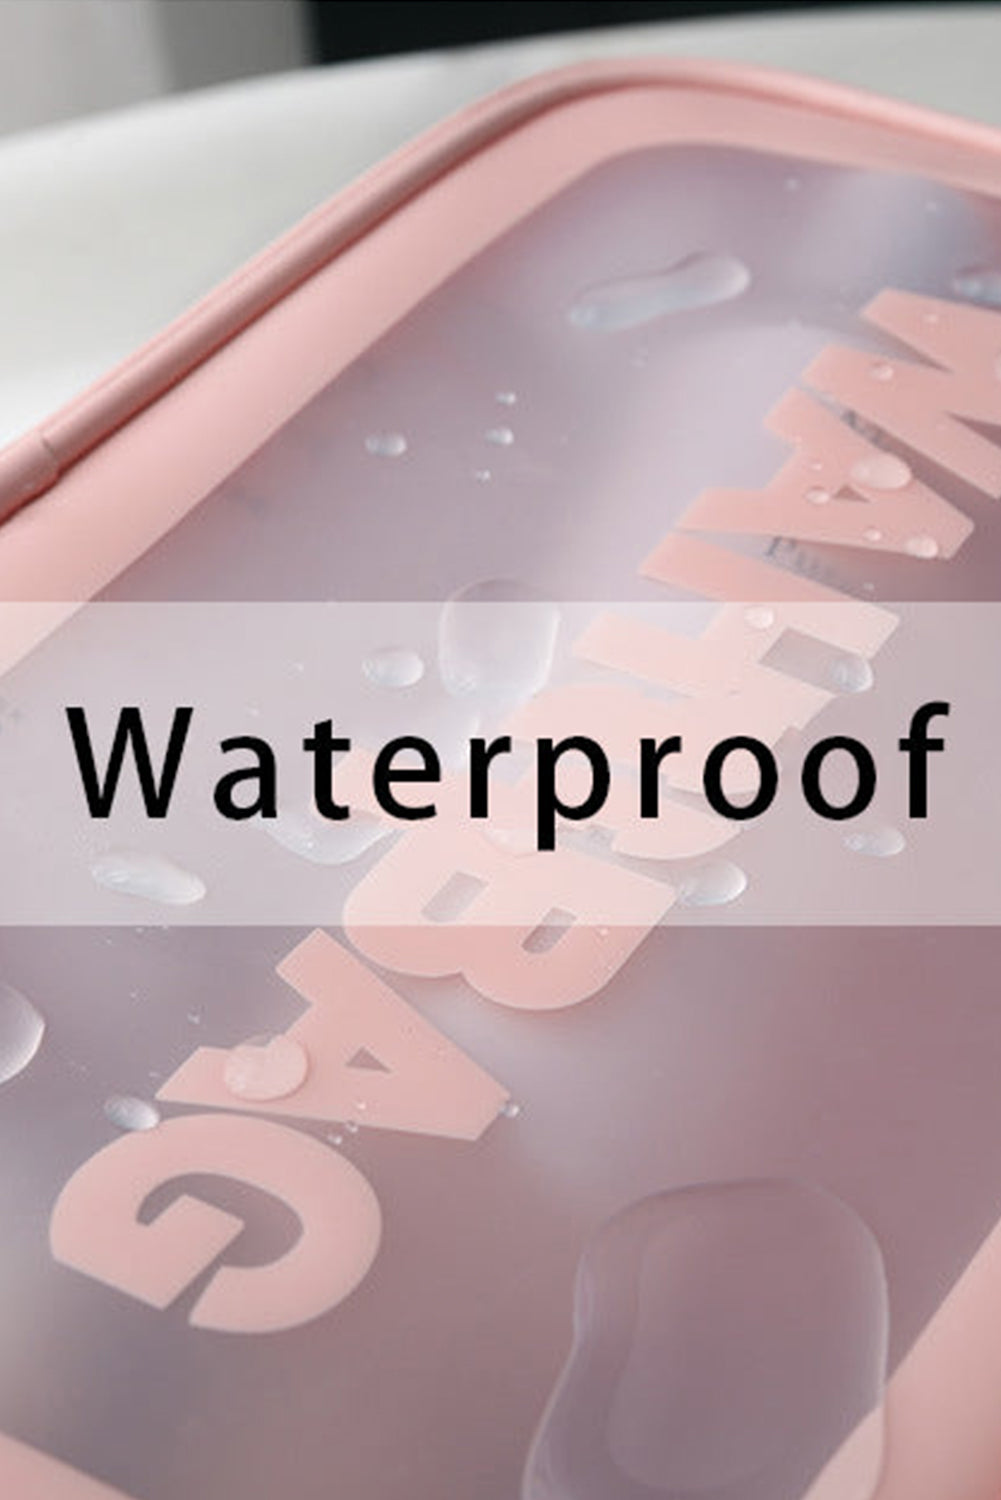 Pink WASHBAG Print Clear Frosted Waterproof 3pcs Bag Set